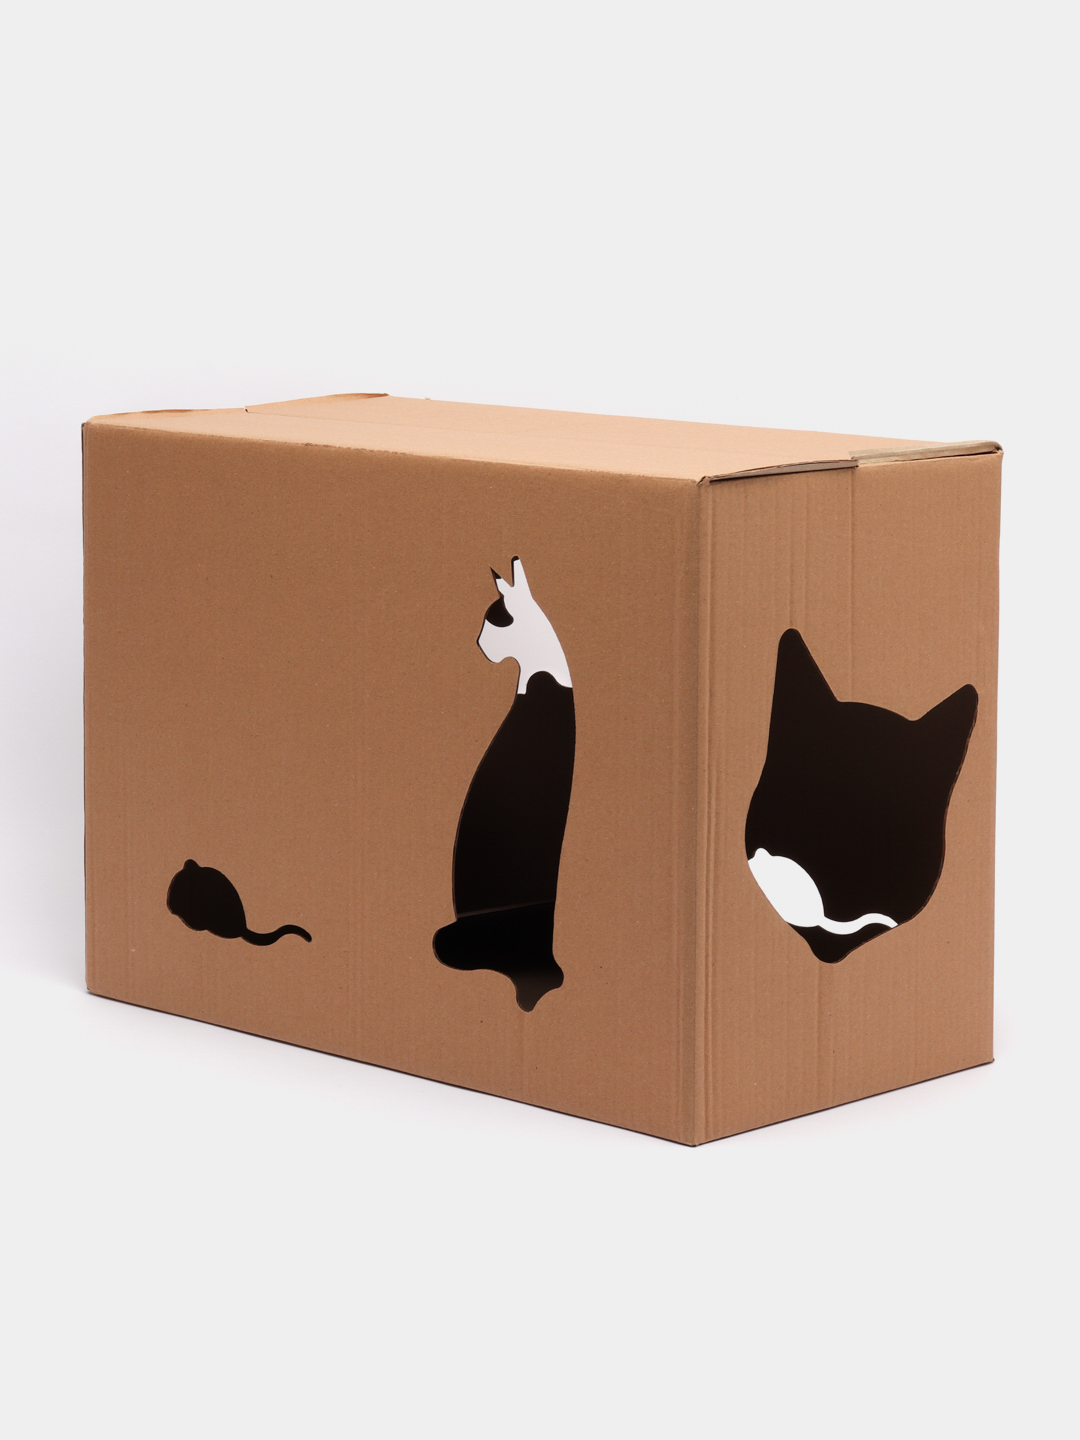 Дом для кошки своими руками из коробки